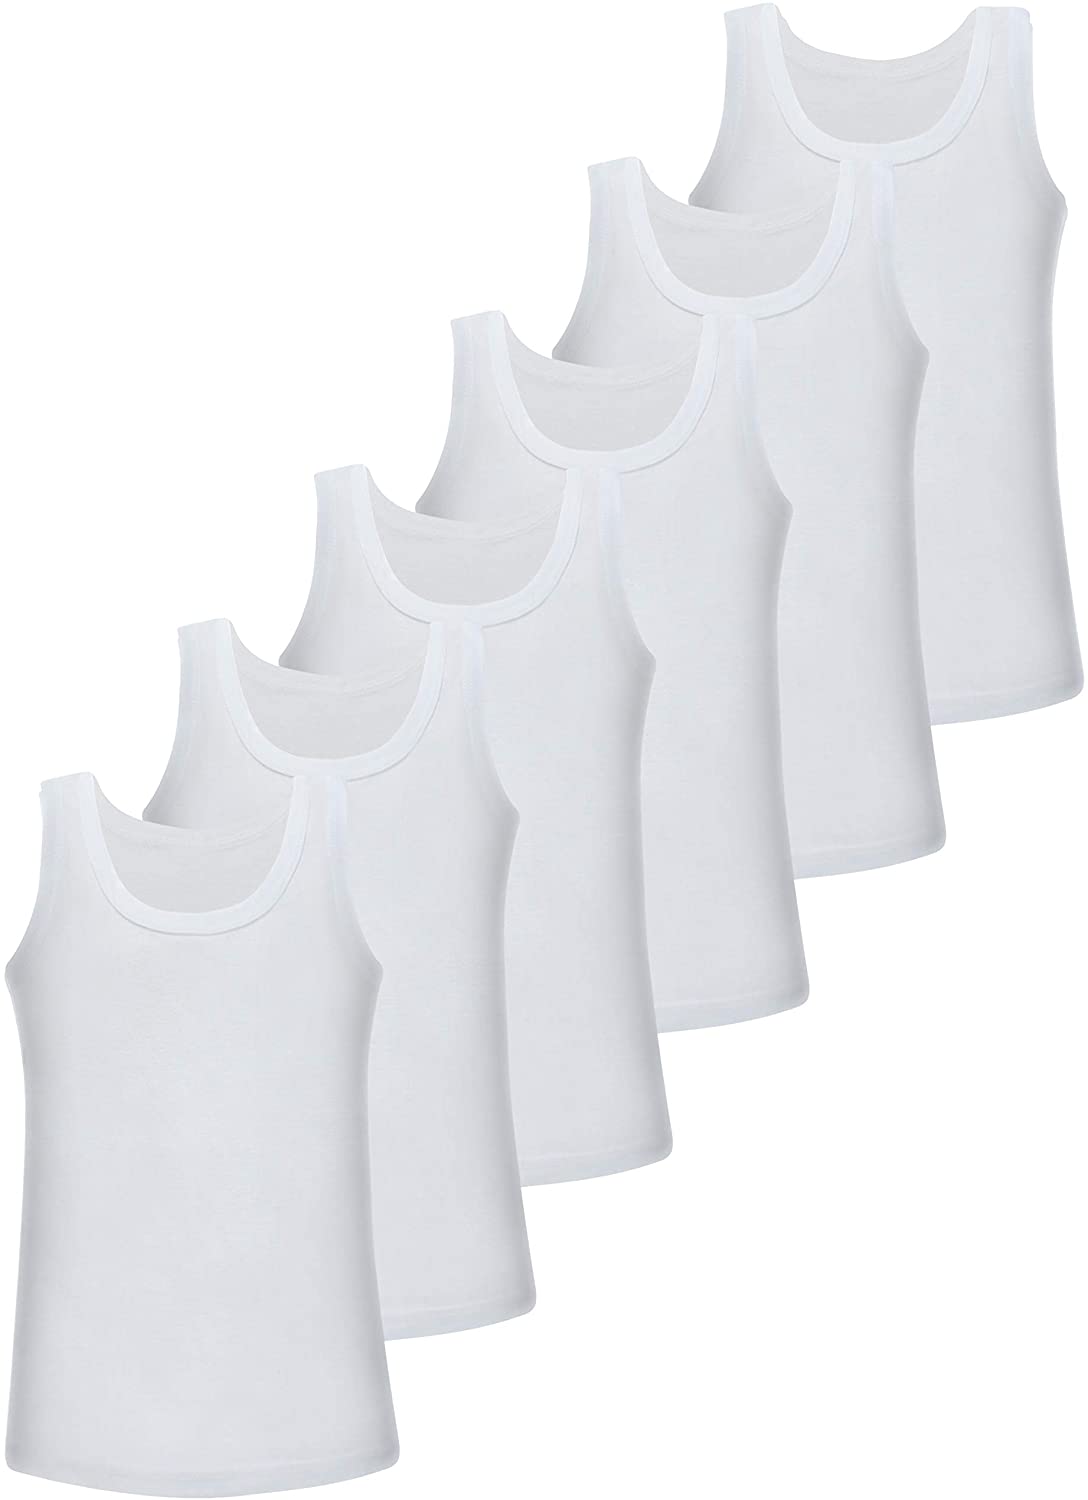 LOREZA ® 6 Pack Jungen Unterhemden 100% Baumwolle Tank Top